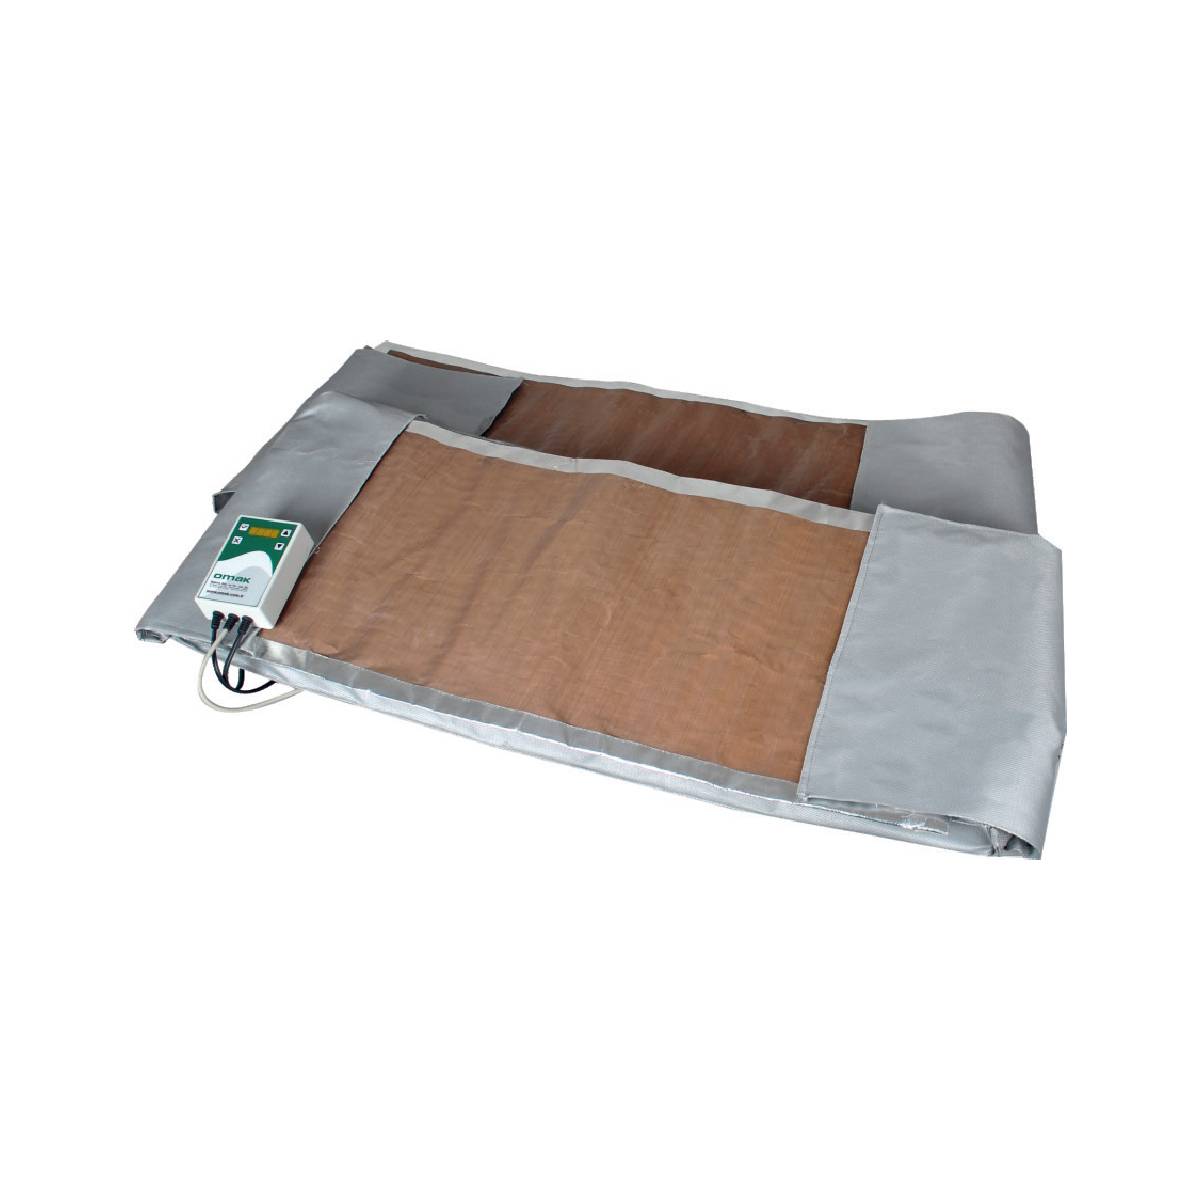 IBC02 IBC Tank Heater Blanket